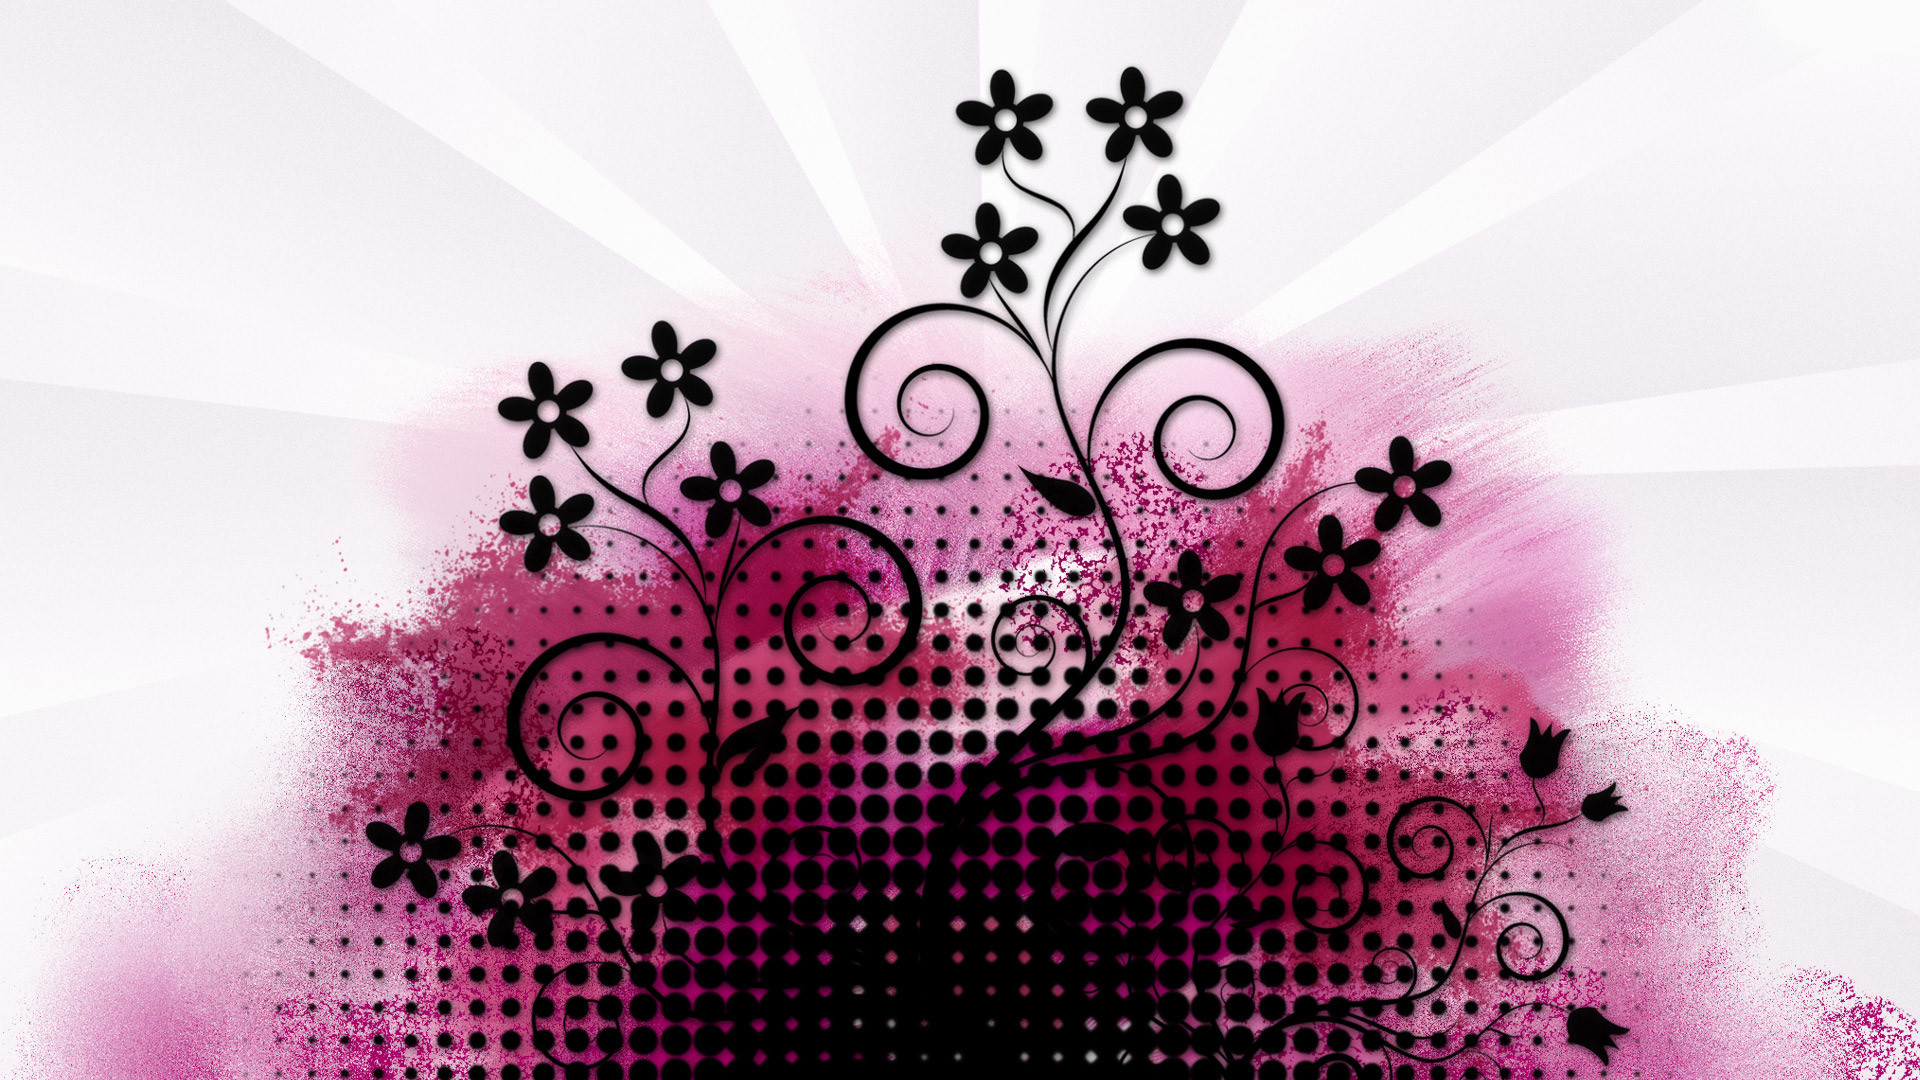 Pink And Black Wallpaper Designs 5 Cool Hd Wallpaper